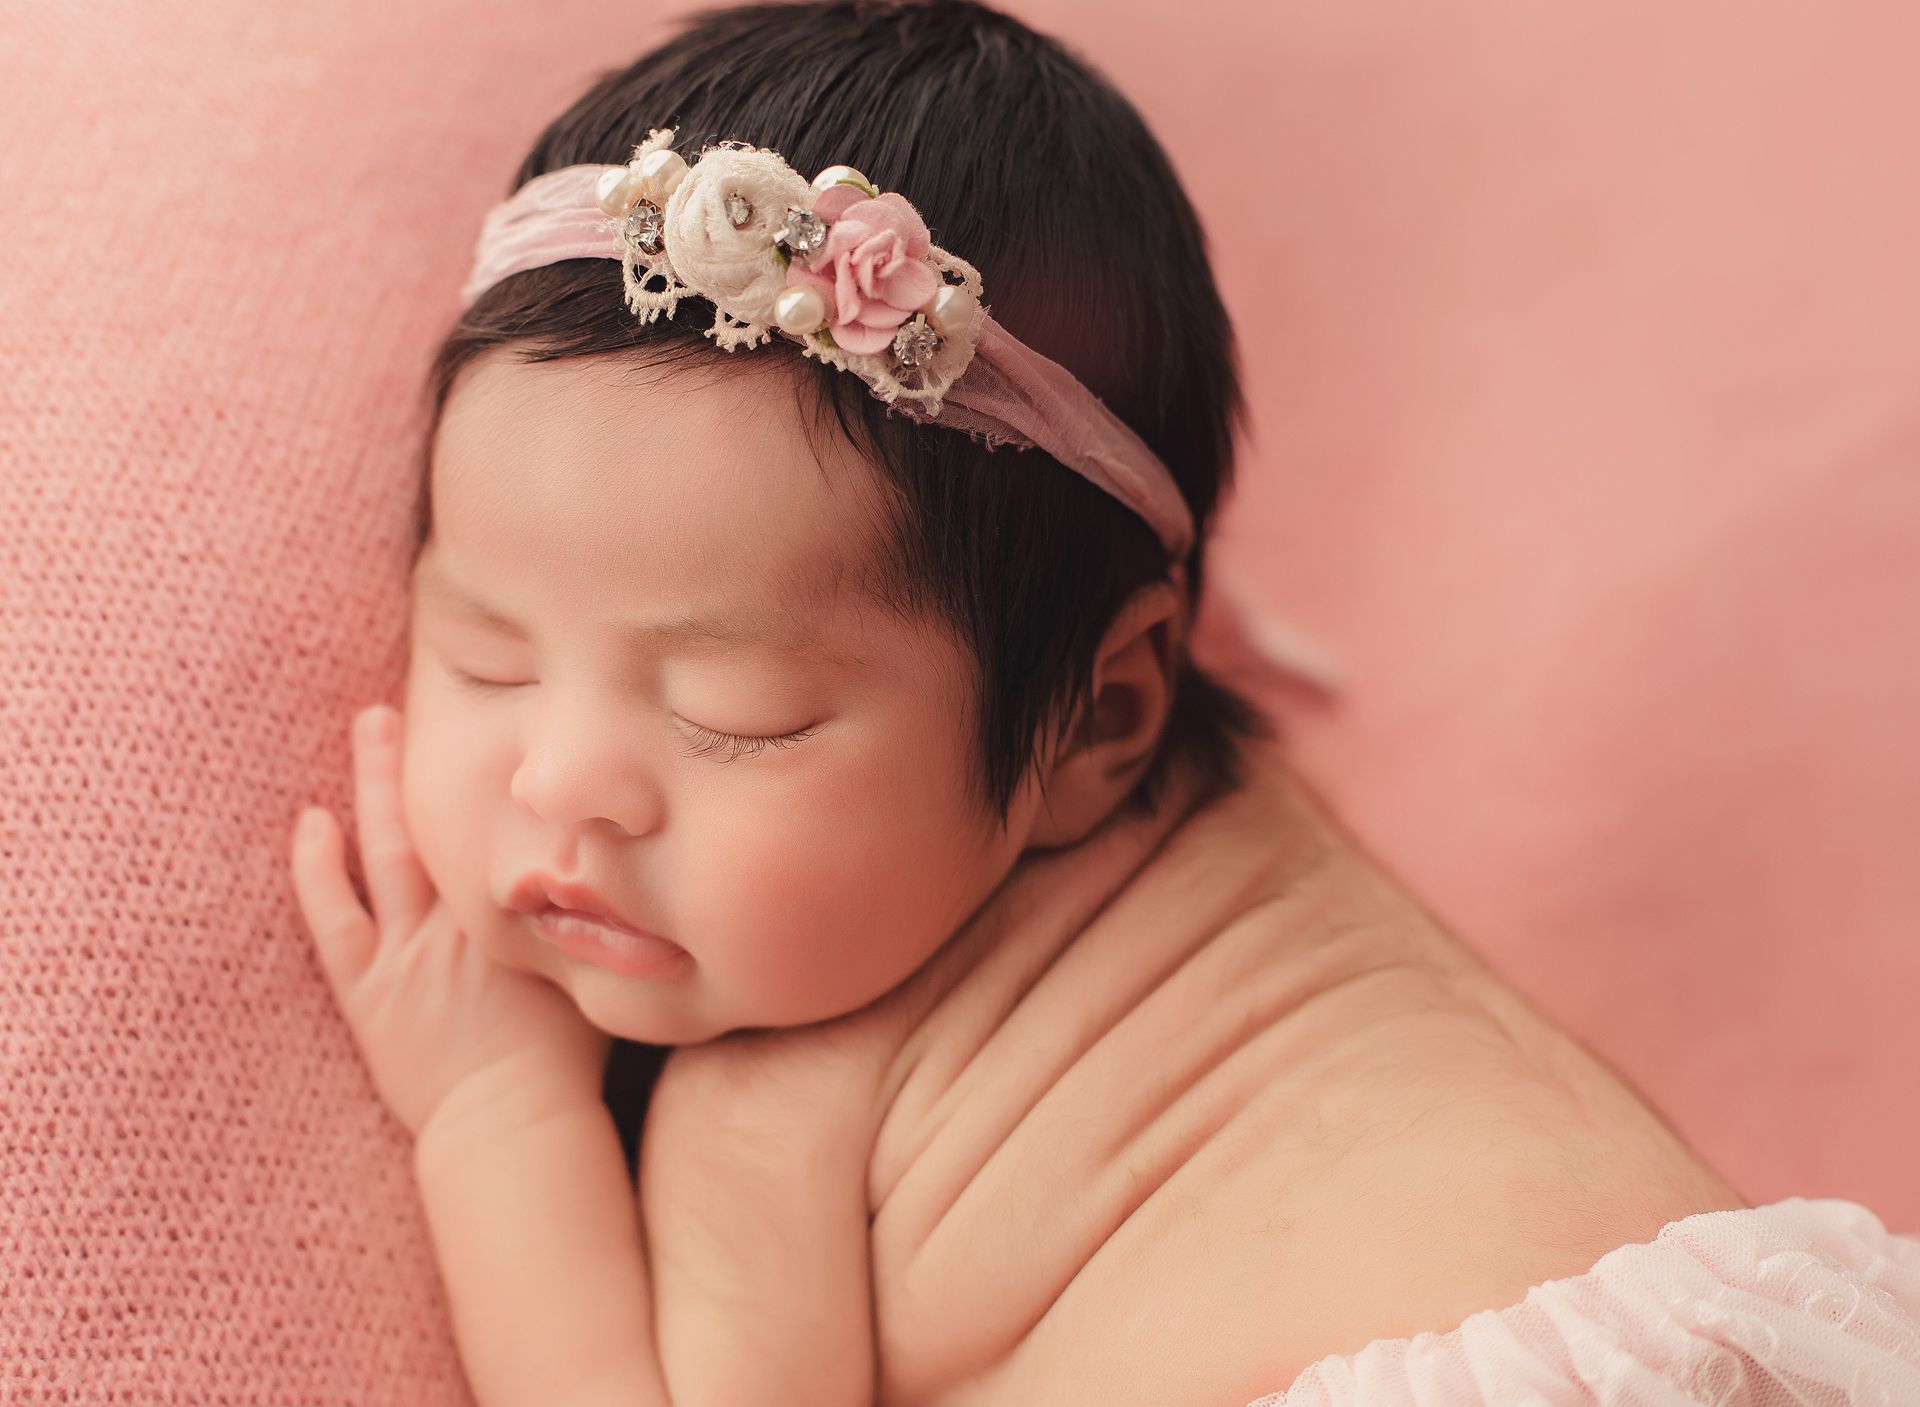 A newborn baby girl wearing a headband is sleeping on a pink blanket.